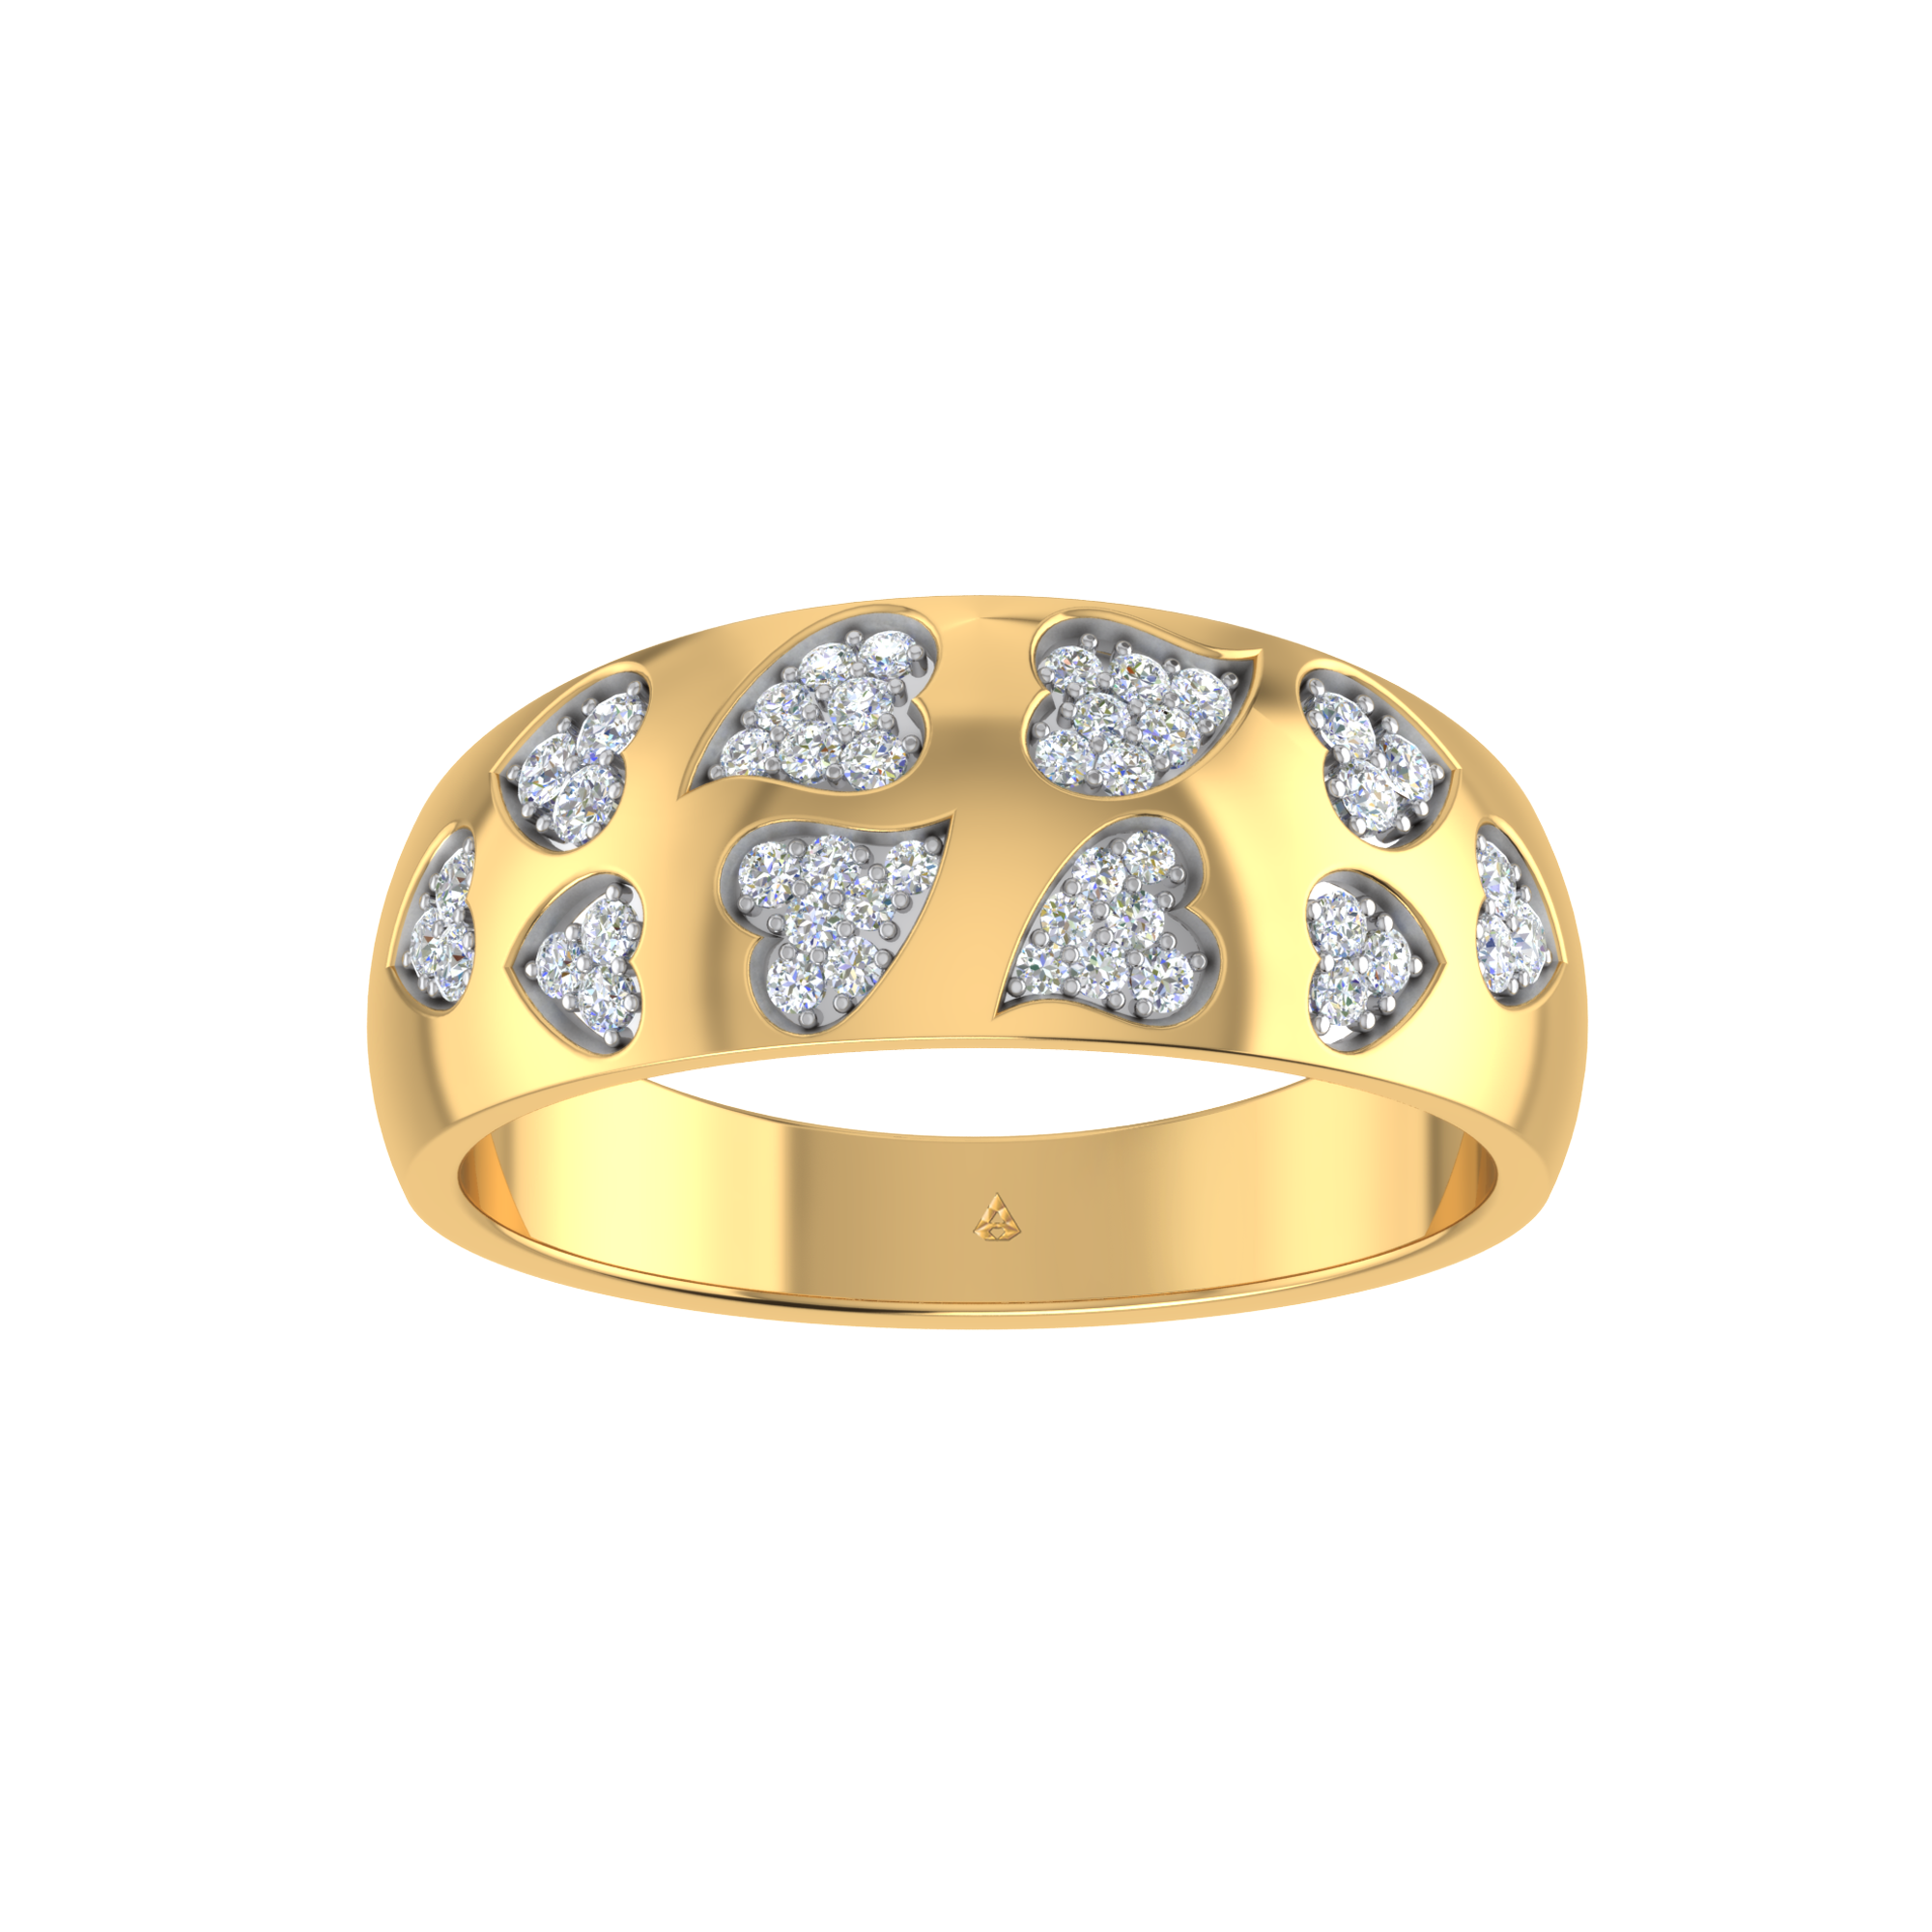 Ladies Net Ring. | 3D CAD Model Library | GrabCAD